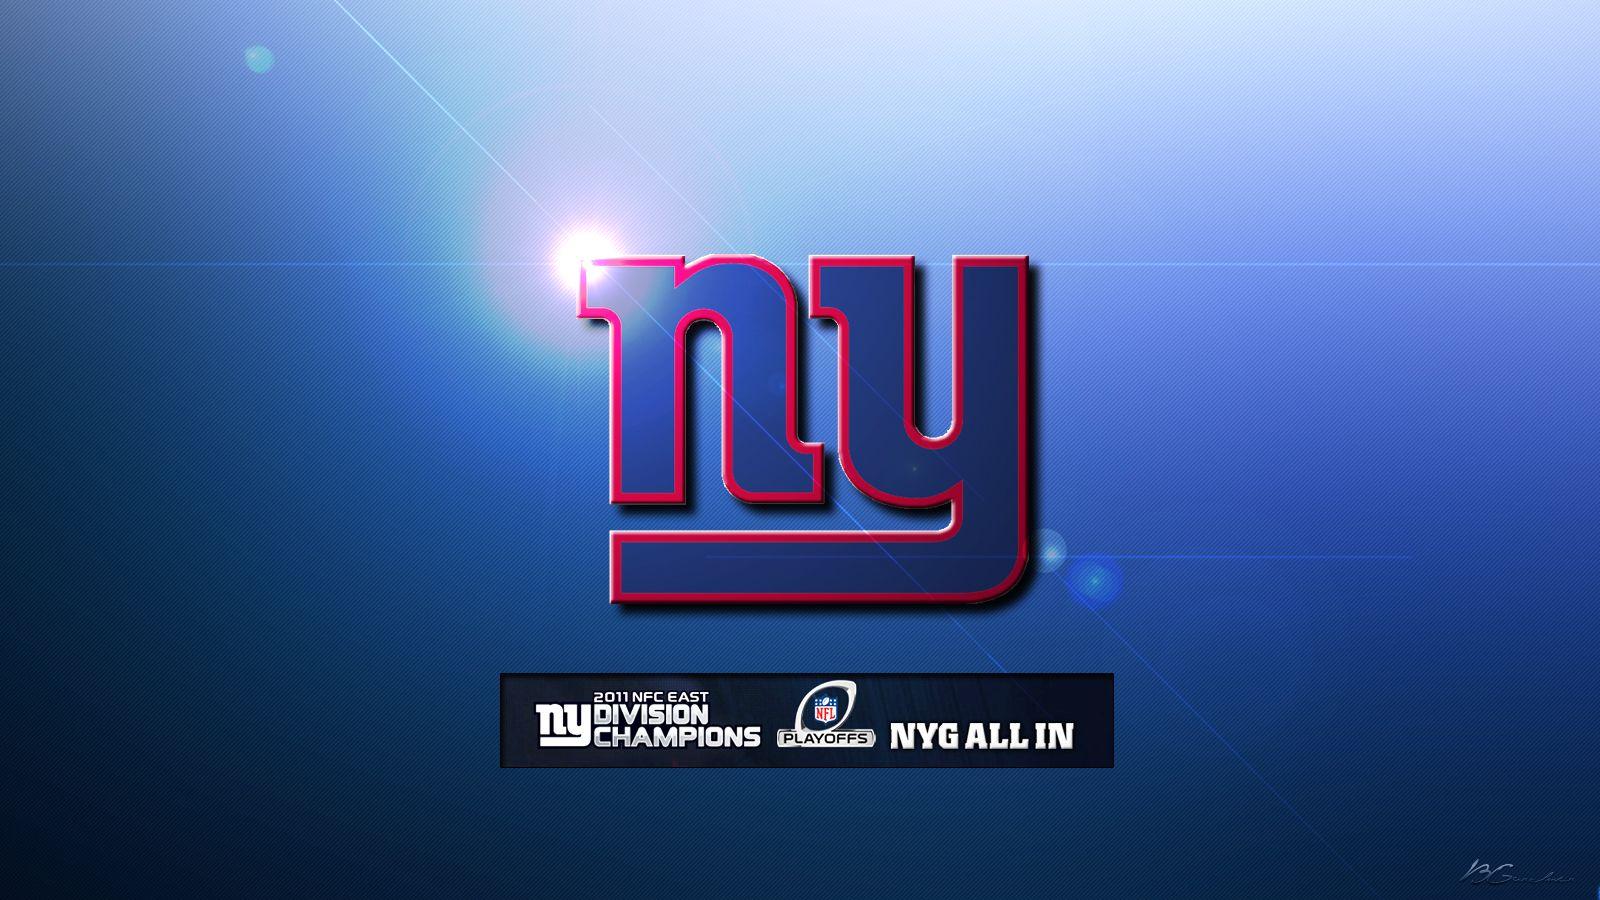 NY Giants 2011 NFC East Champions Wallpaper